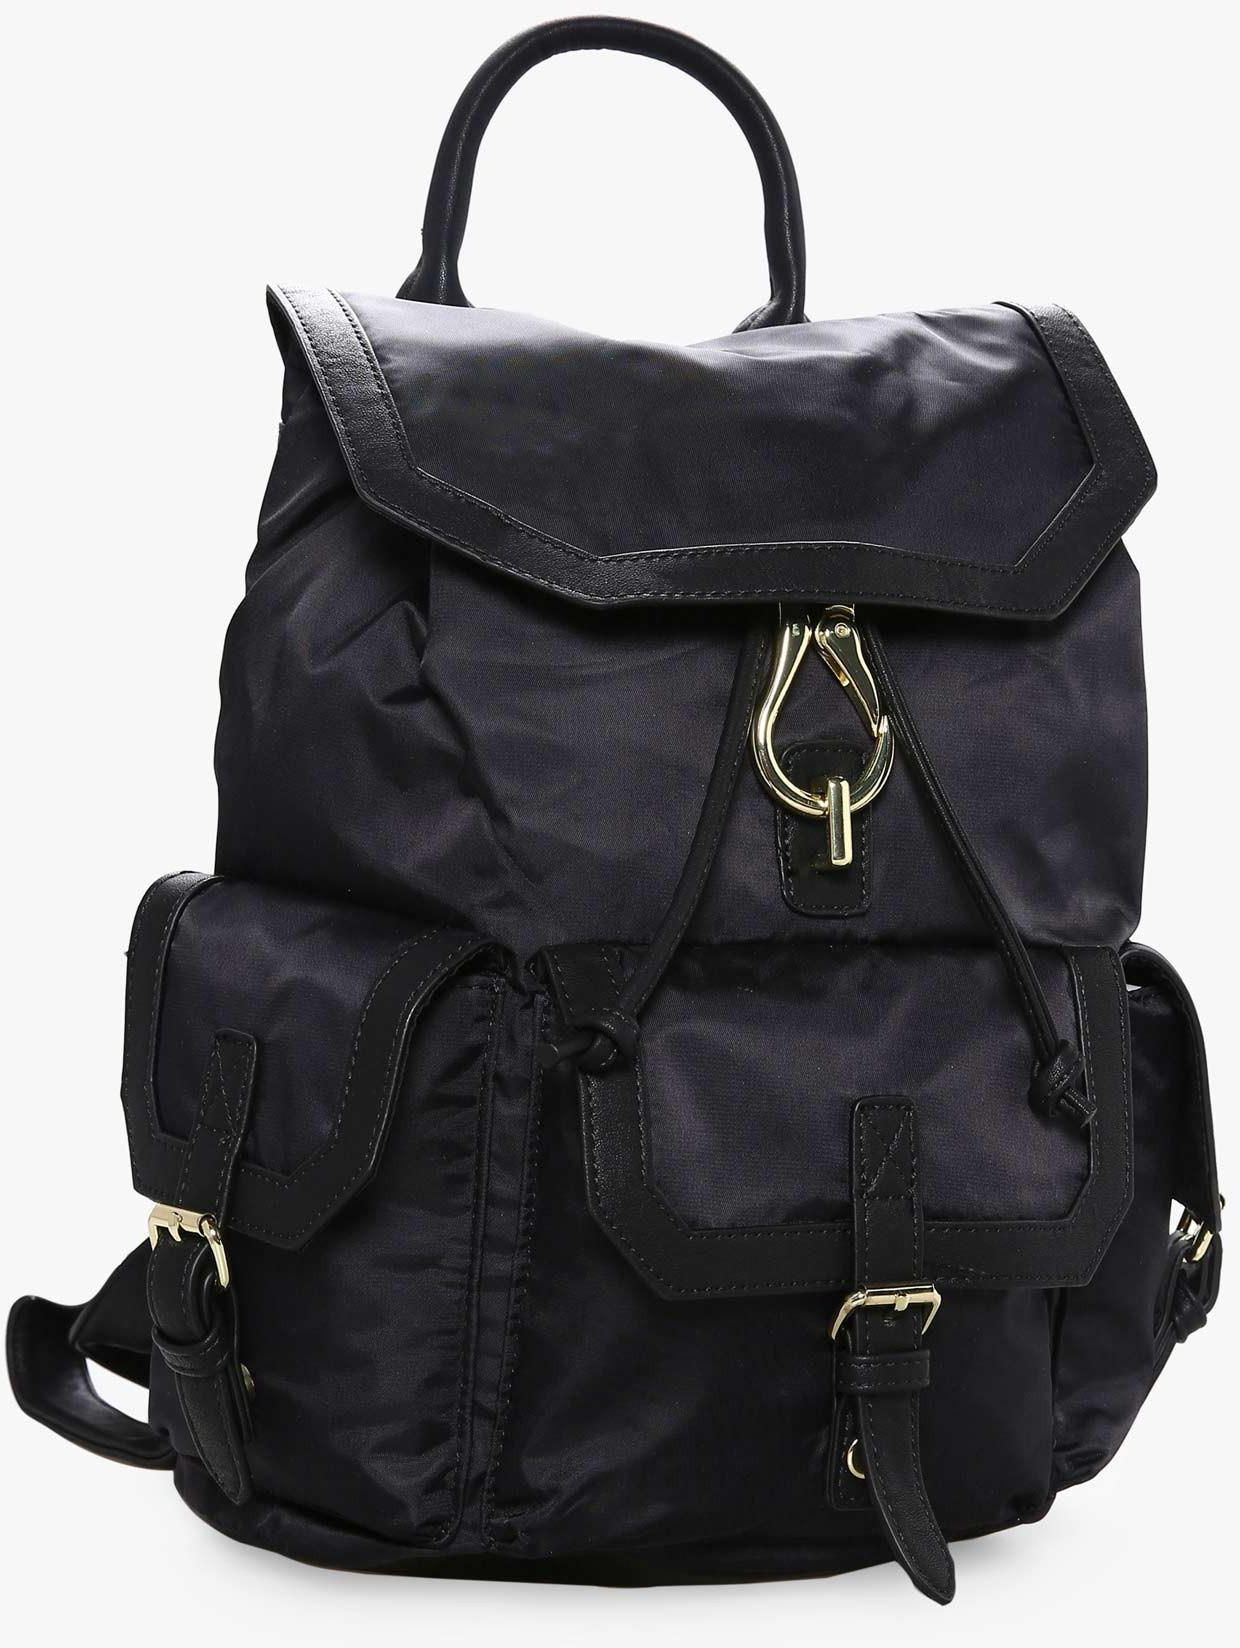 Black MgFortun Backpack